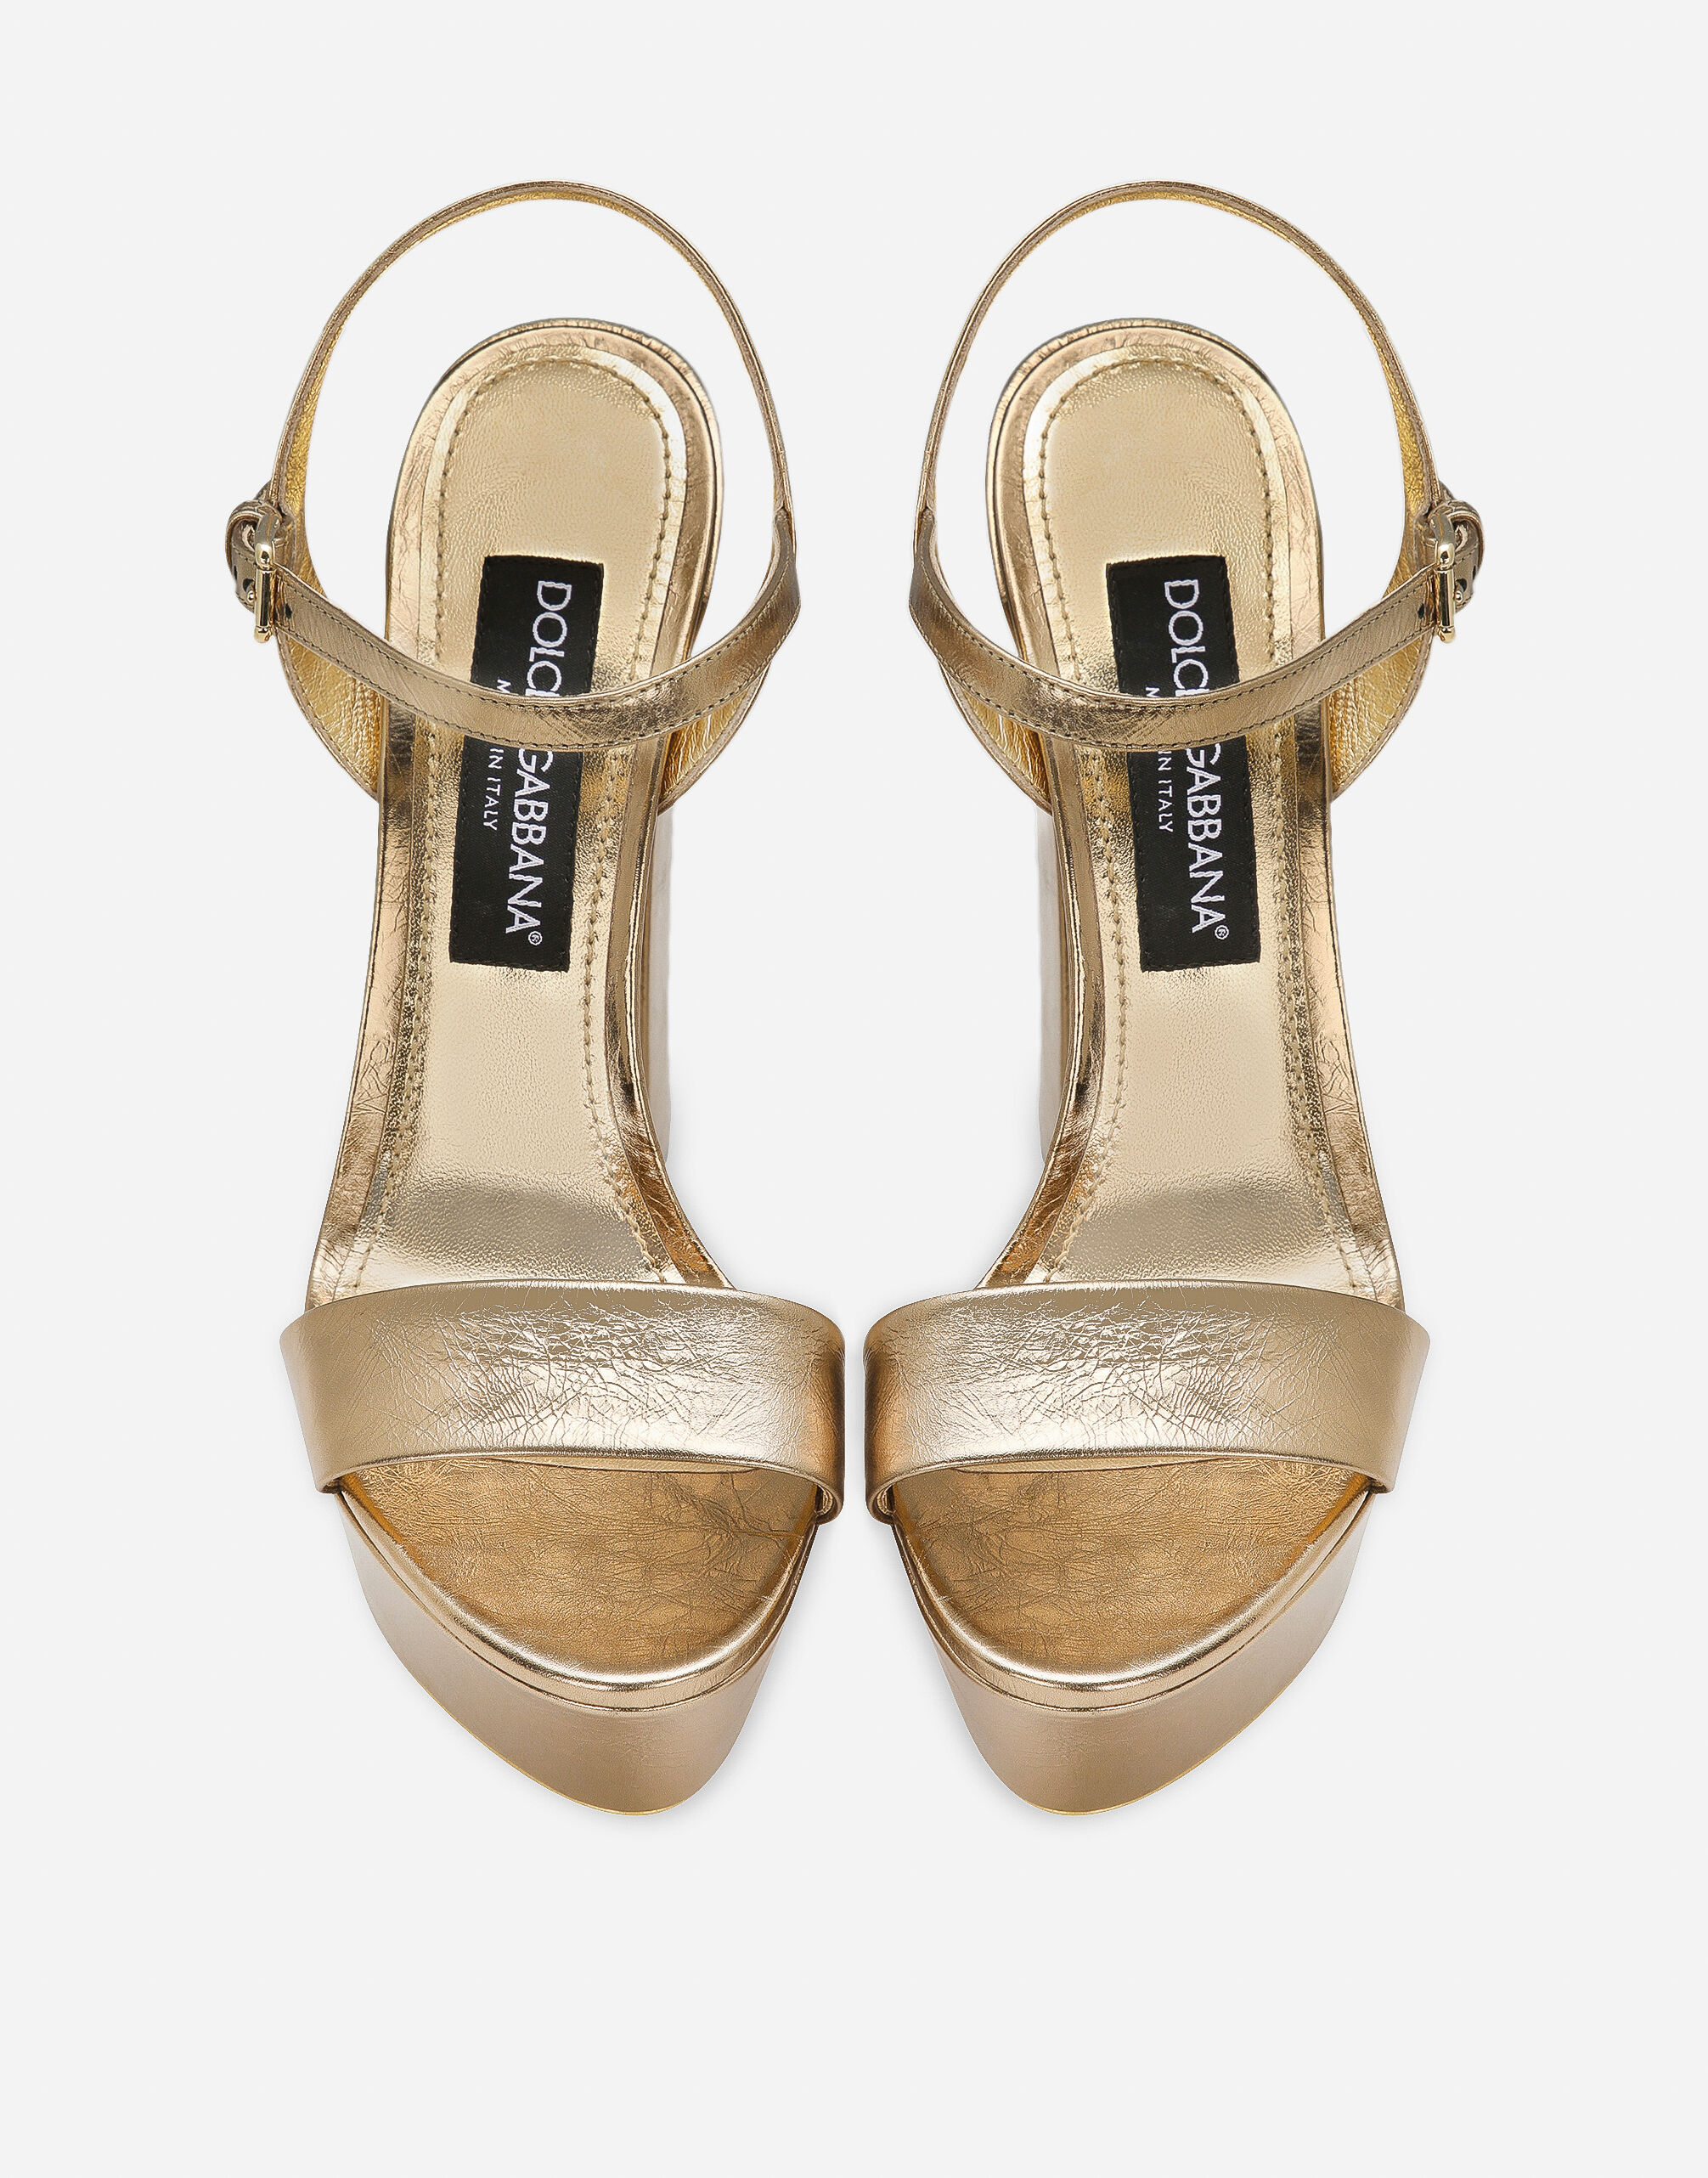 Foiled craquelé calfskin platform sandals in Gold for 